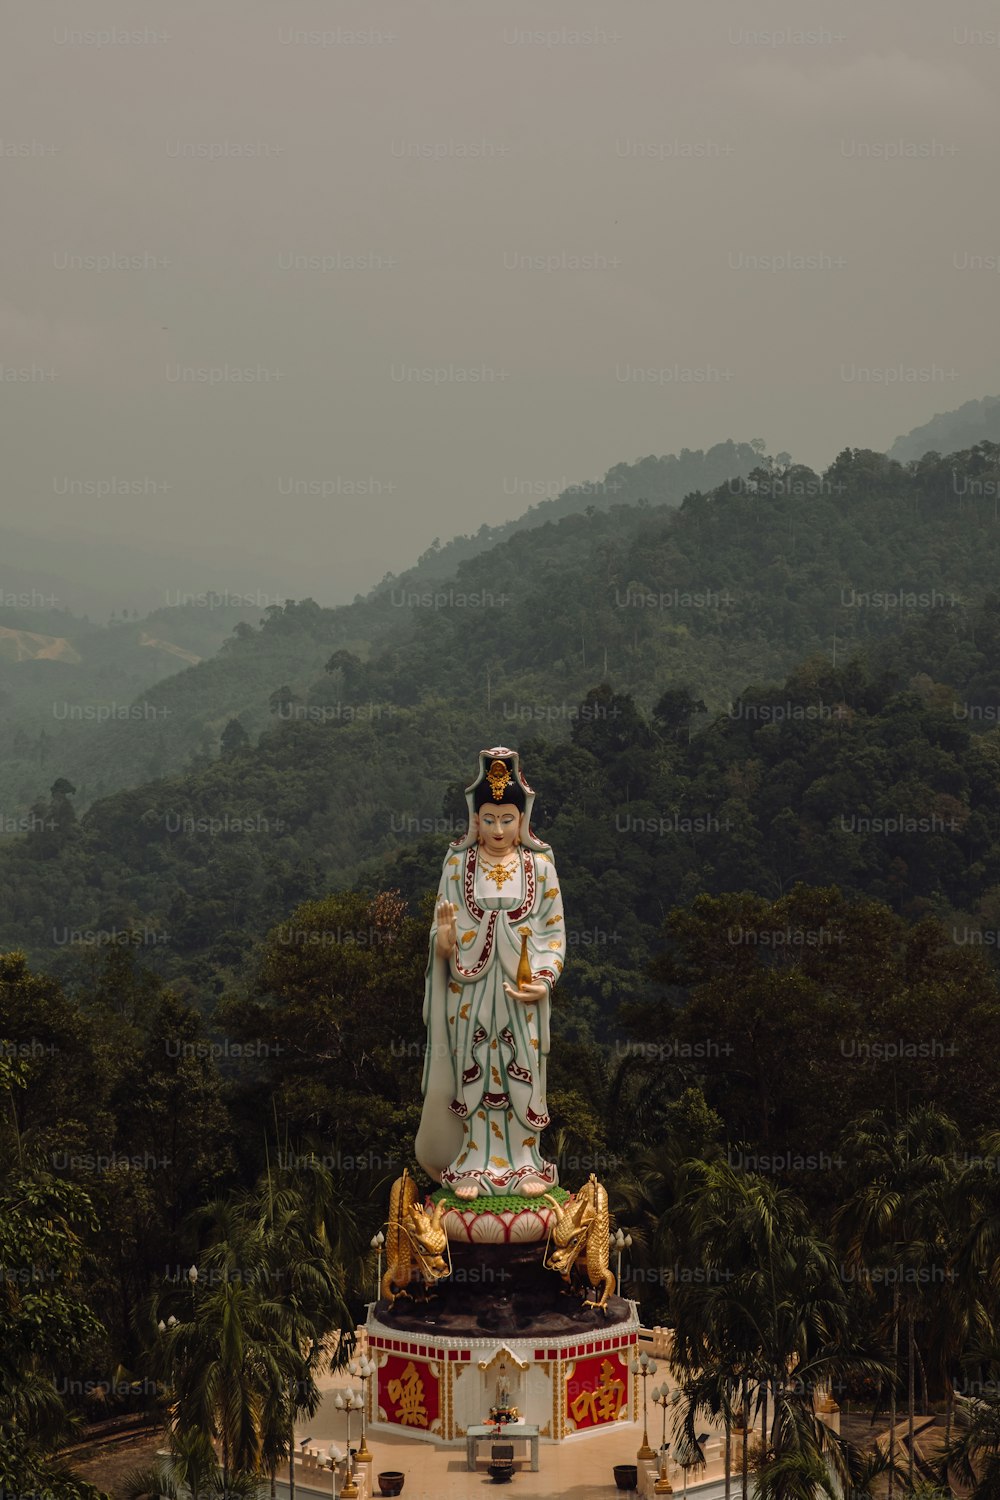 una estatua de una persona parada en la cima de una colina